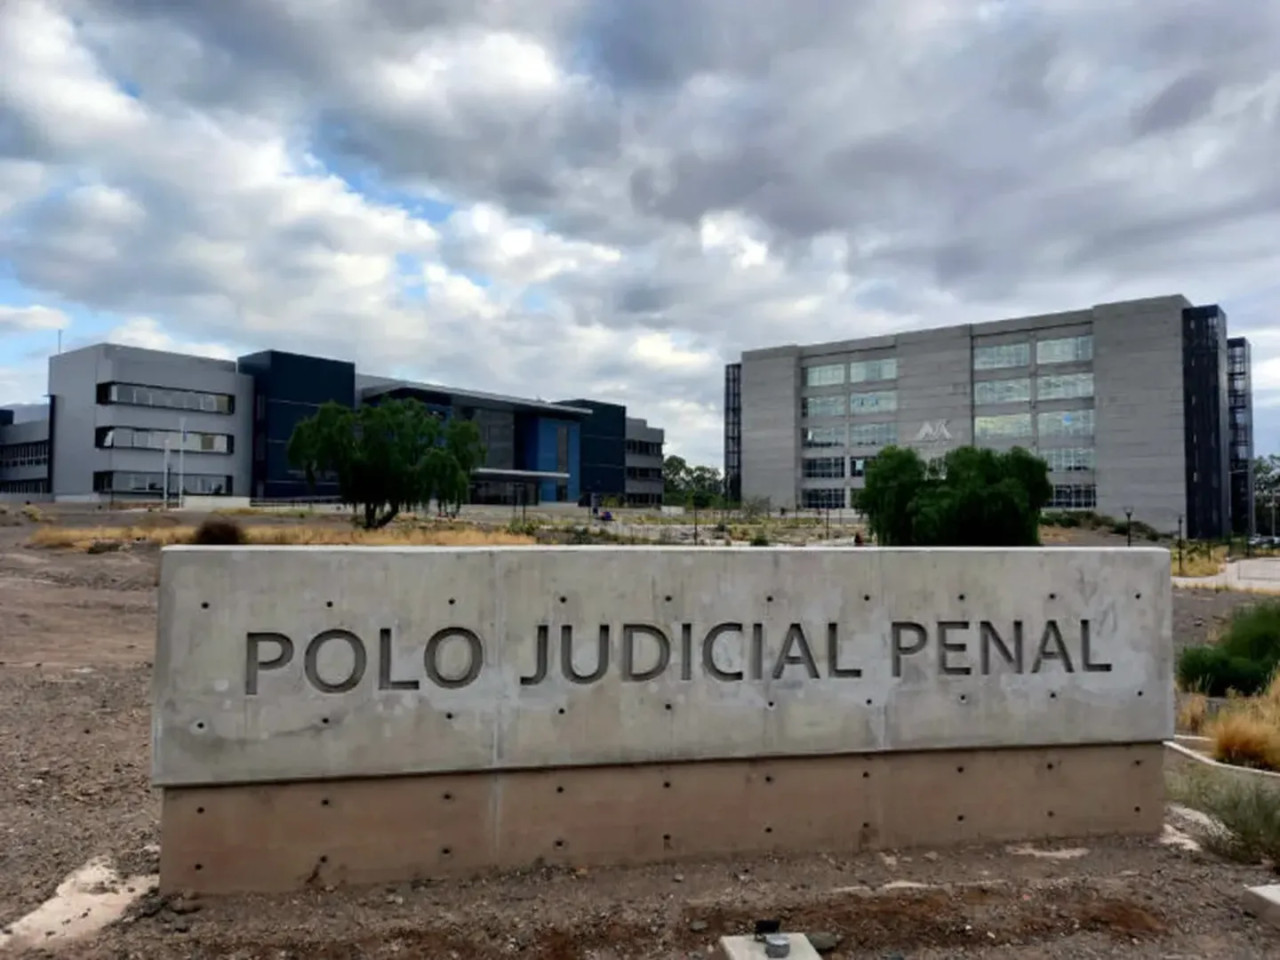 Polo Judicial Penal de Mendoza. Foto: Gentileza Diario Uno